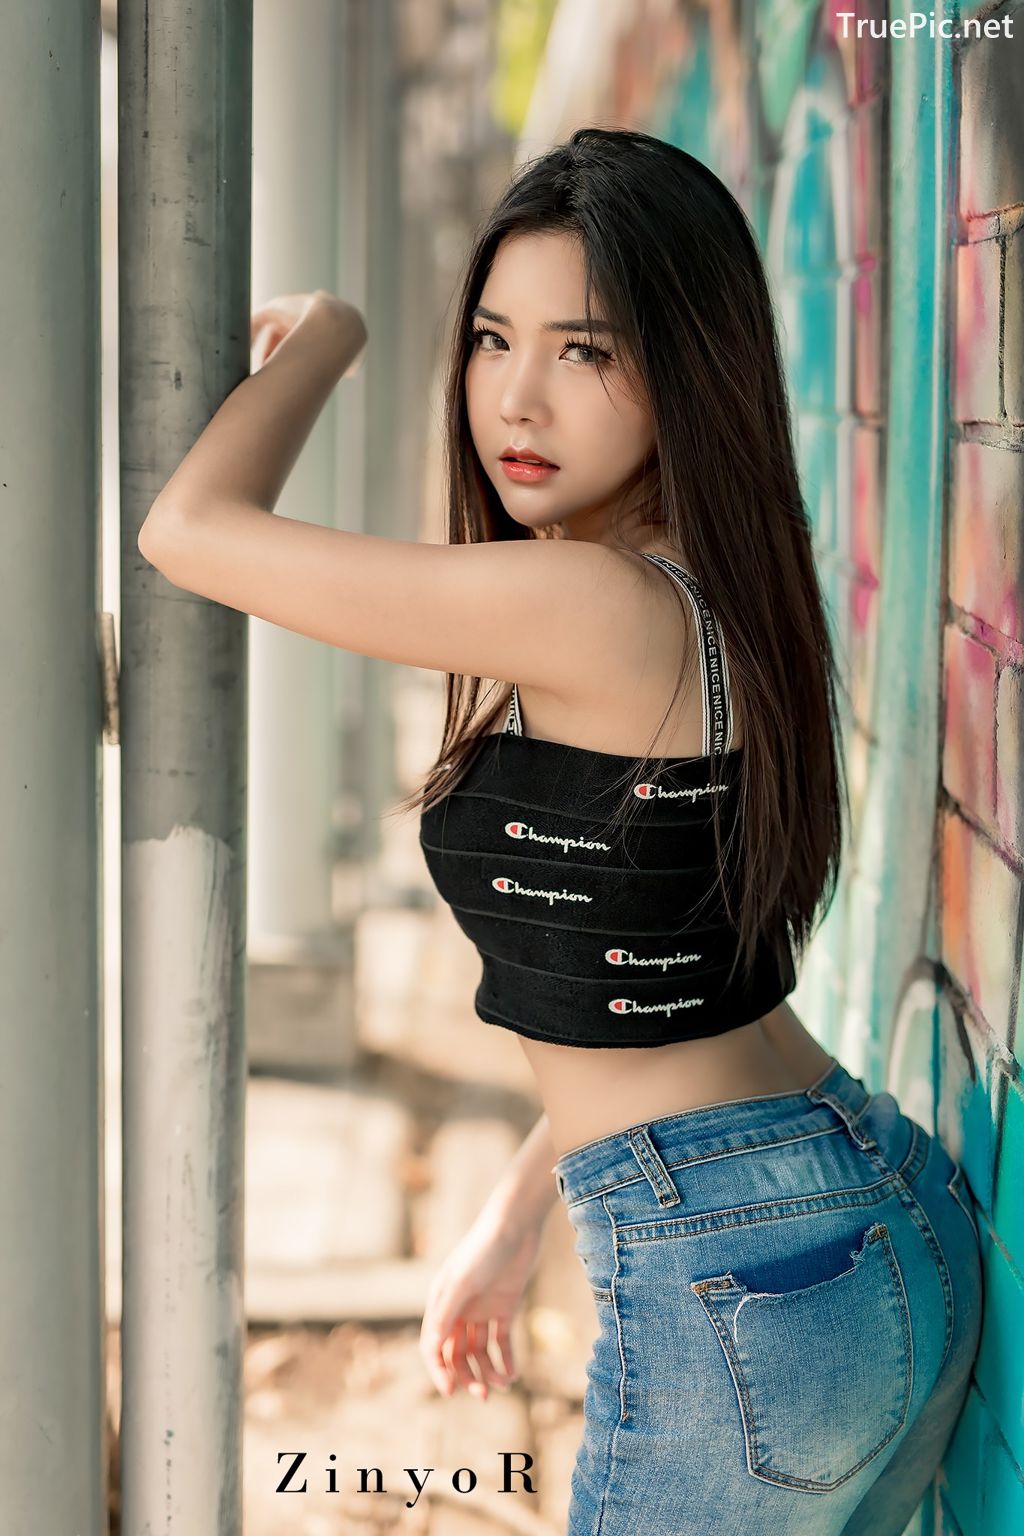 True Pic Thailand Model Phitchamol Srijantanet Black Crop Top And Jean